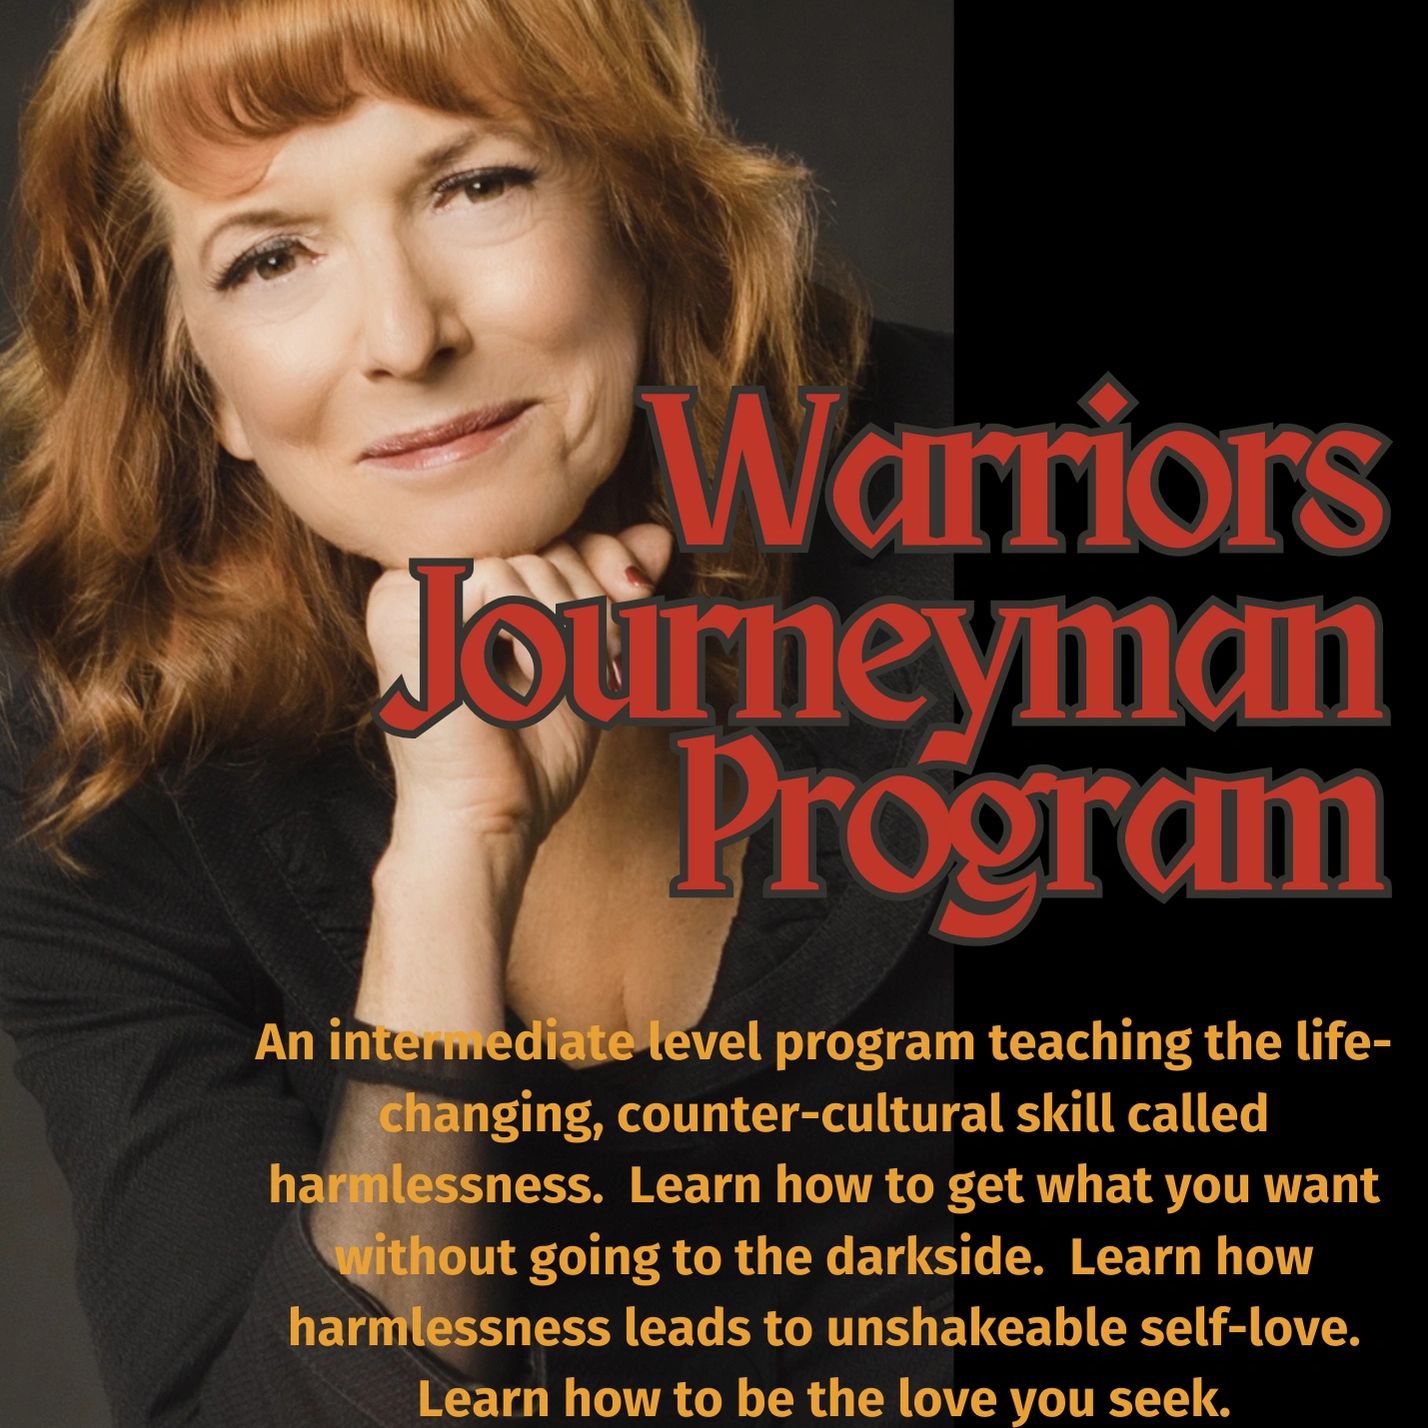 Karen Bentley's Warriors Journeyman Program, an intermediate level program teaching the skill of har